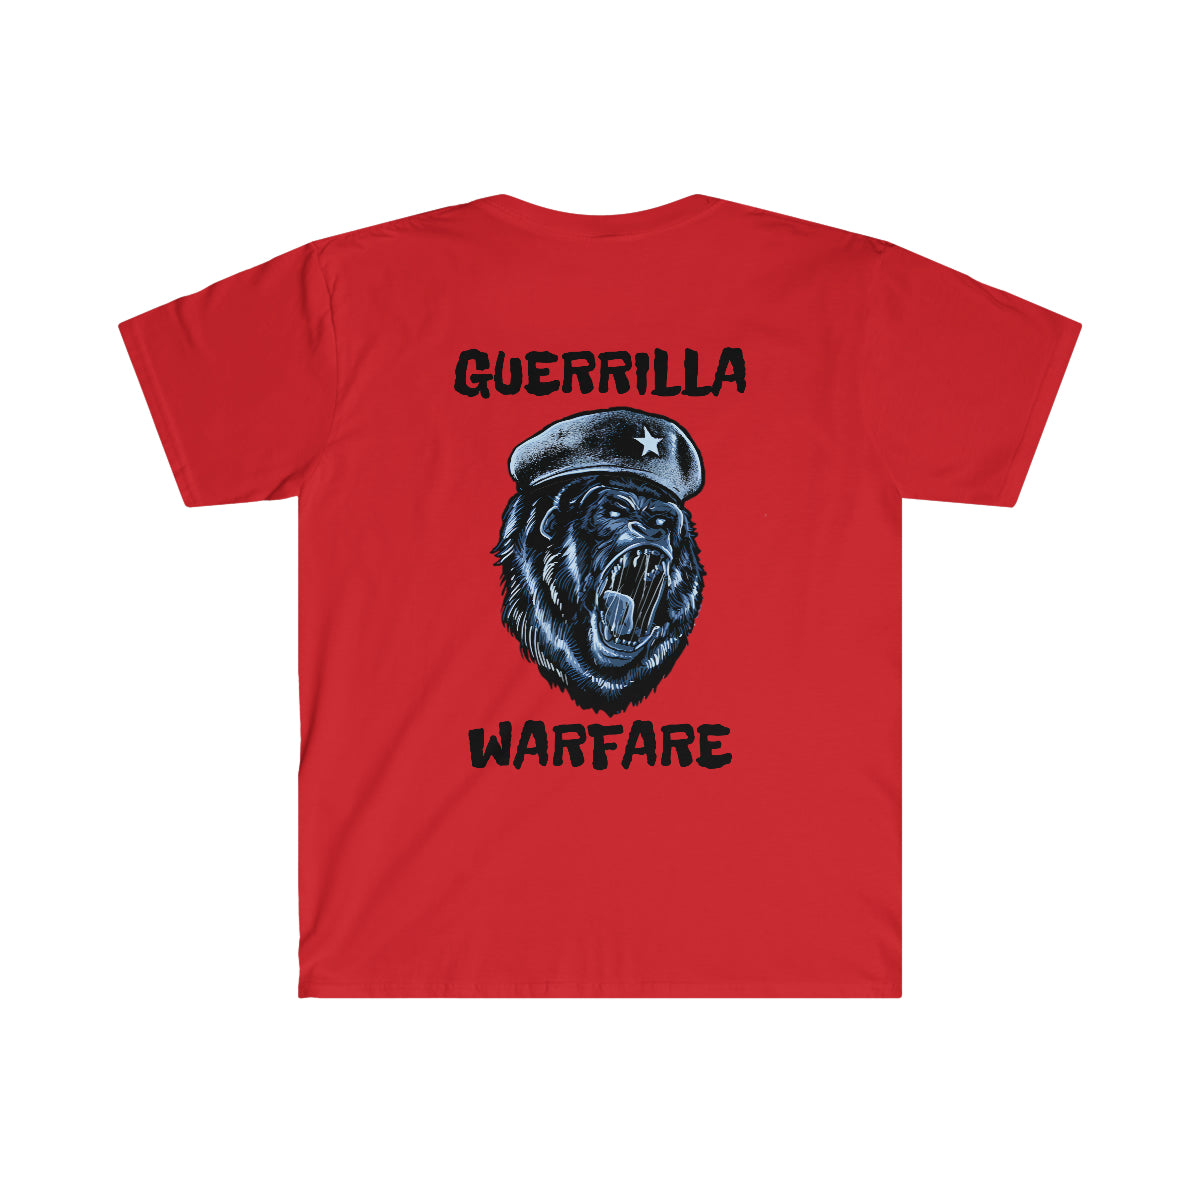 GUERRILLA WARFARE Unisex Softstyle T-Shirt WAR COLLECTION